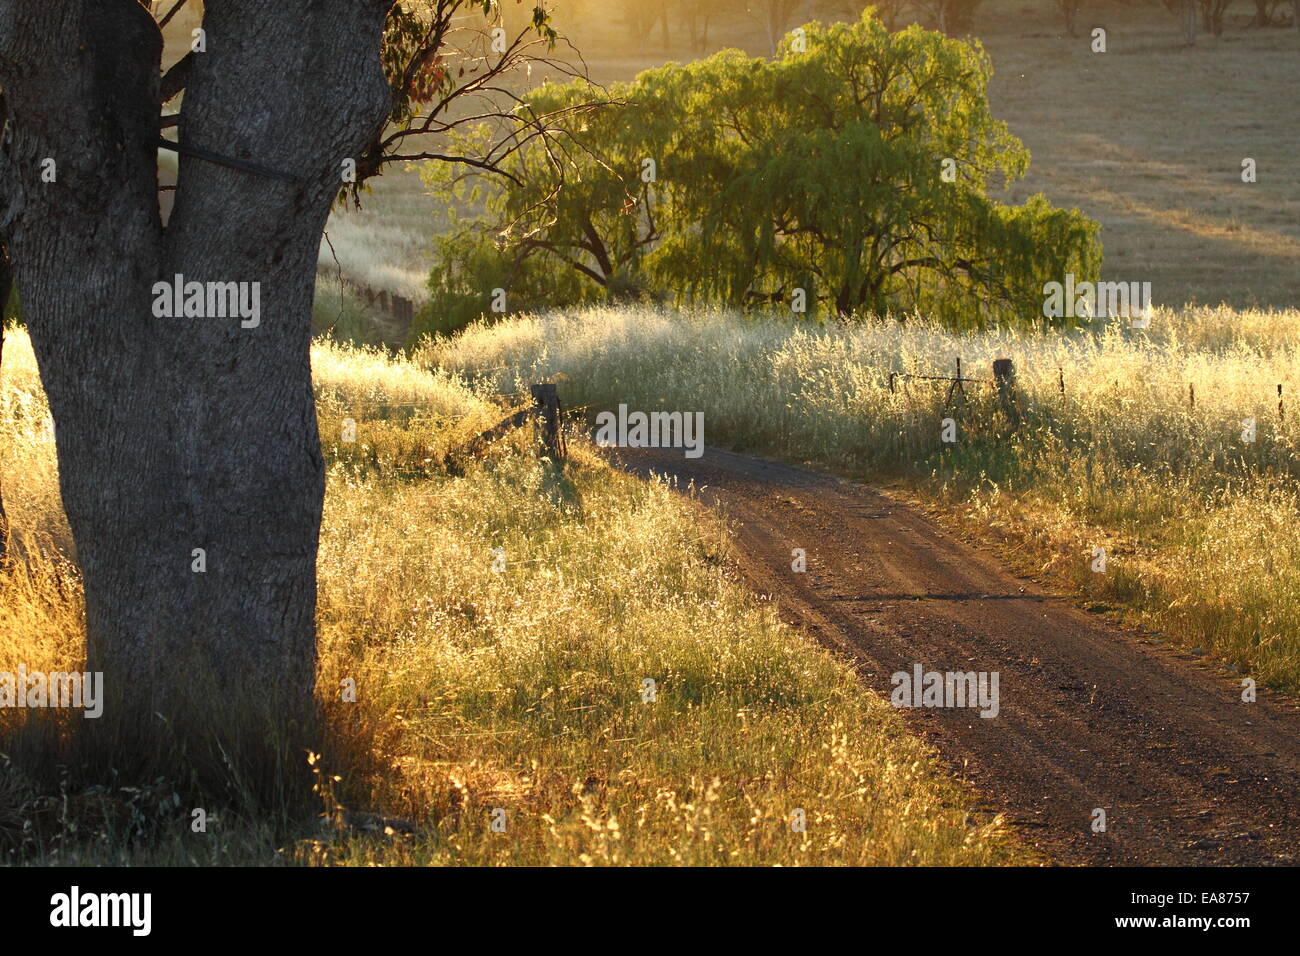 Dawn's promise of warmth, near Aspley, NSW. I love rural scenes. Stock Photo